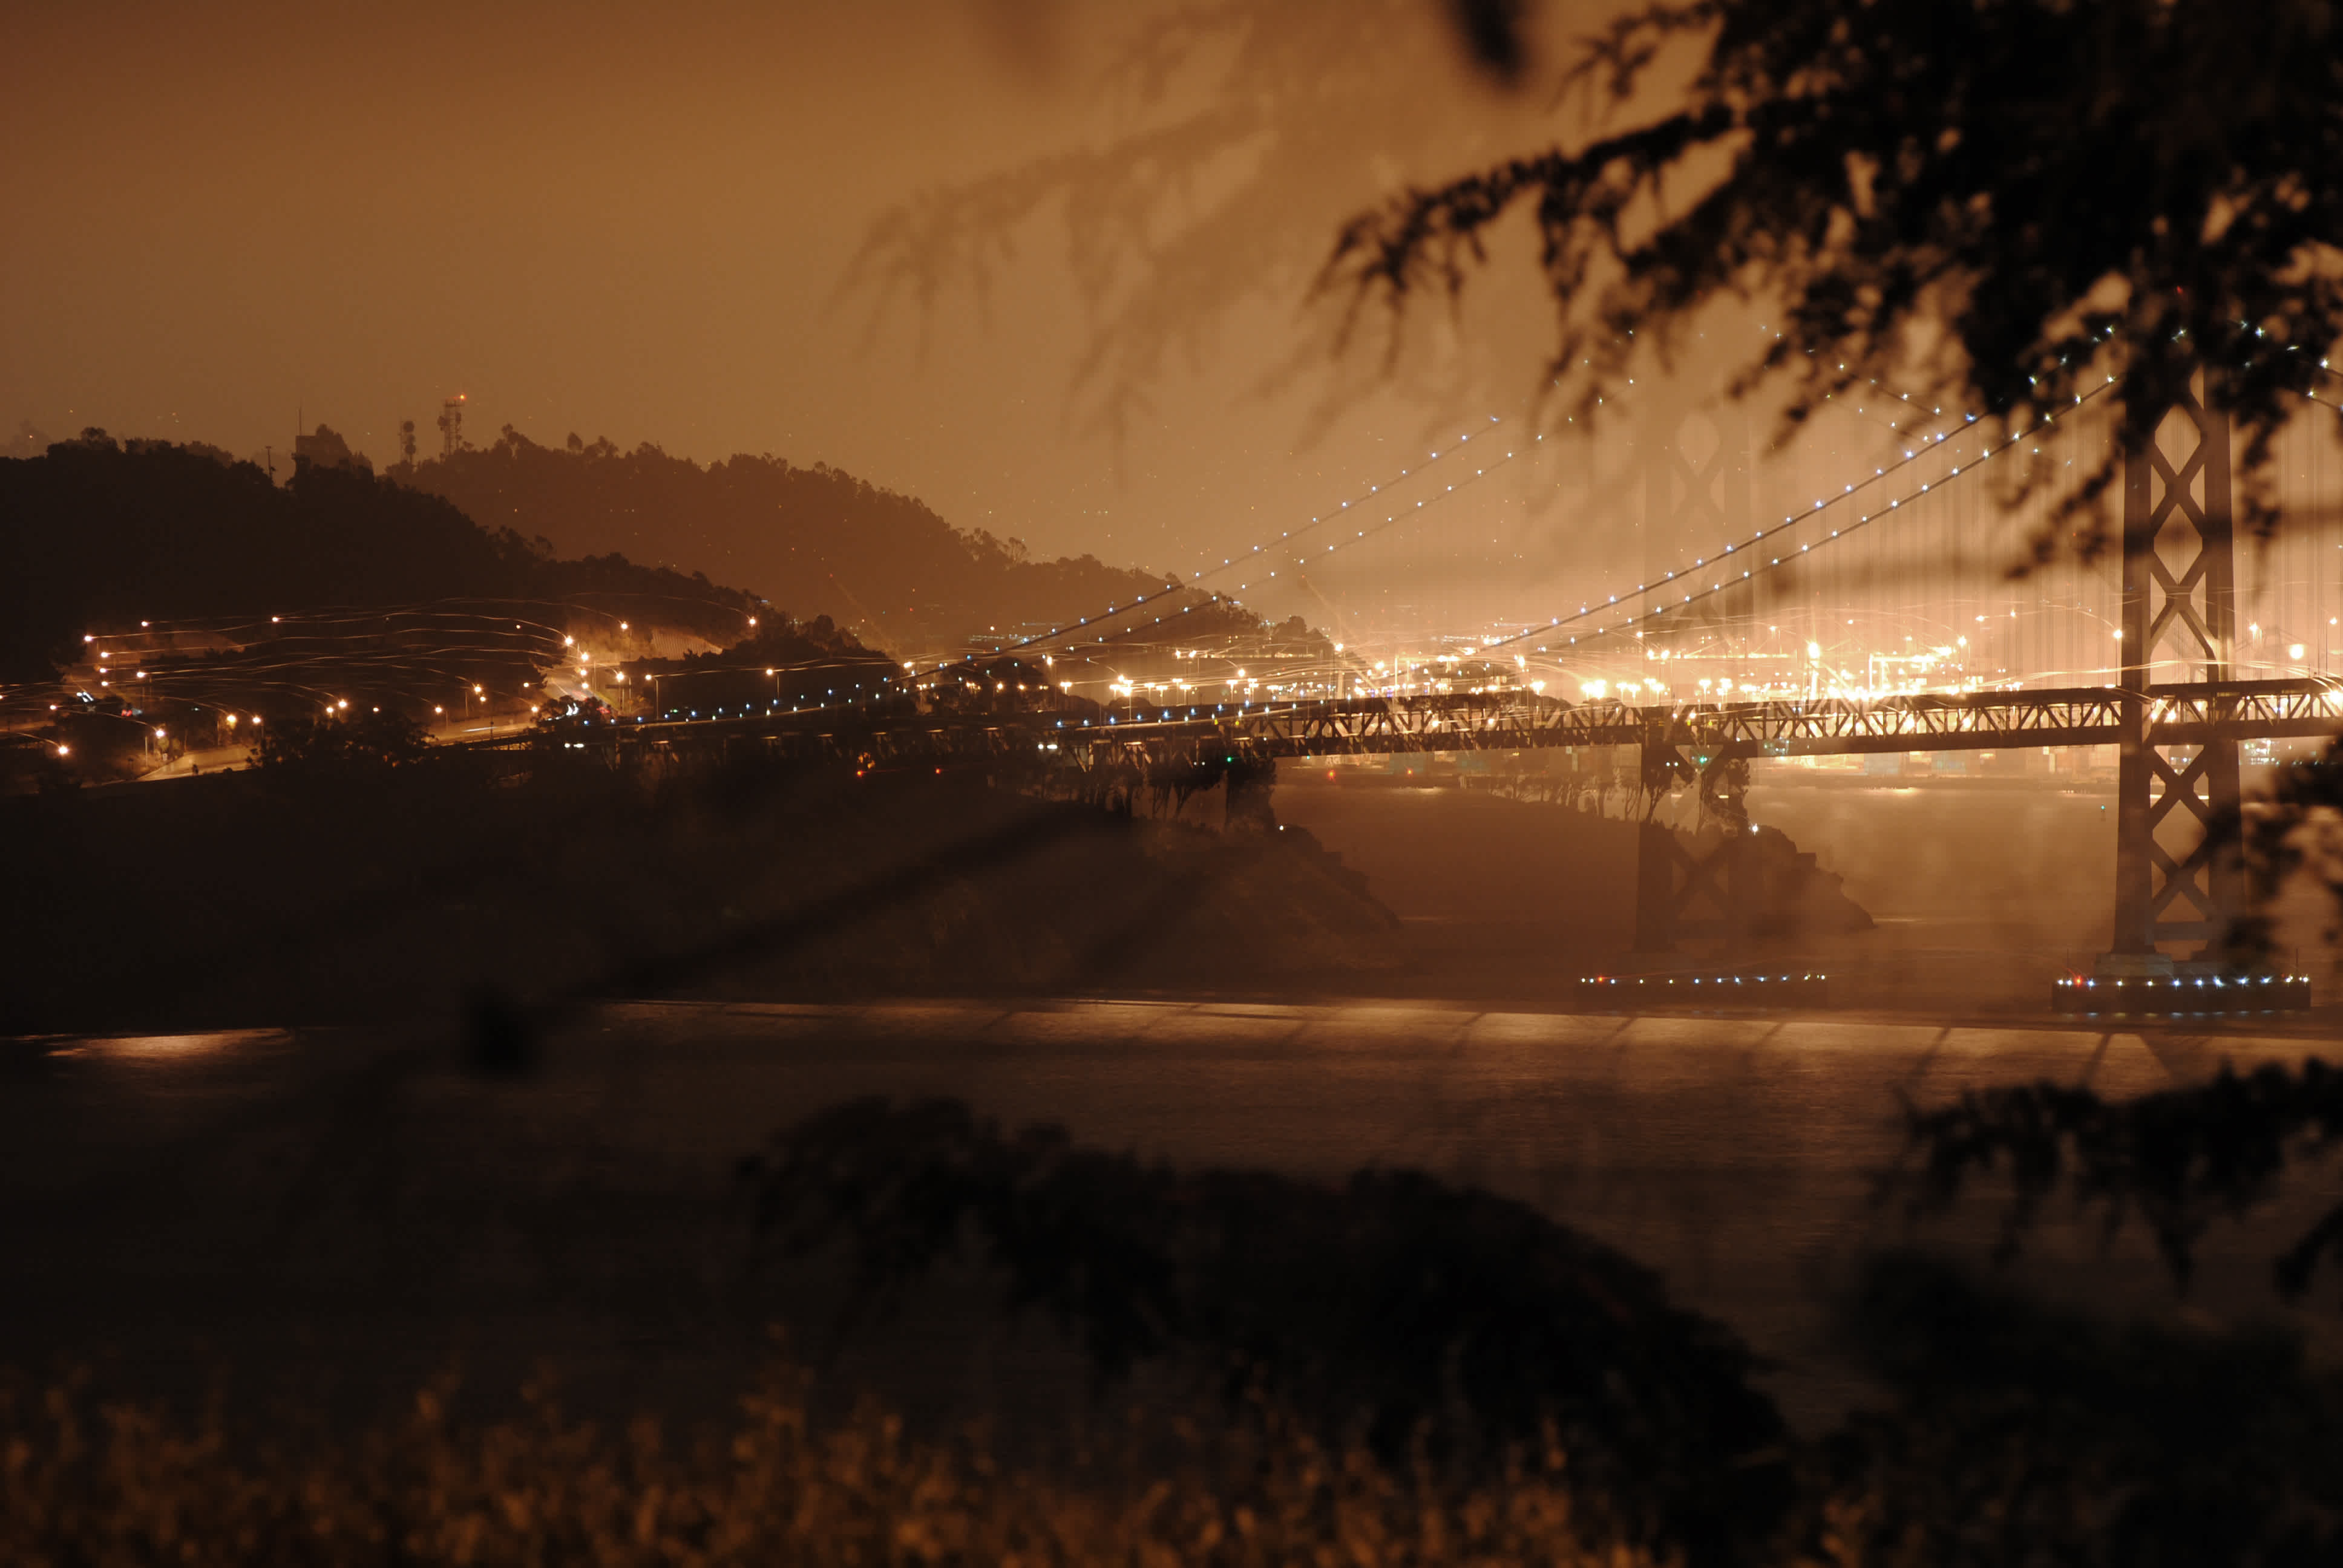 Double exposure photograph of the Golden Gate Bridge at night in Golden Gate Bridge, San Francisco, California.